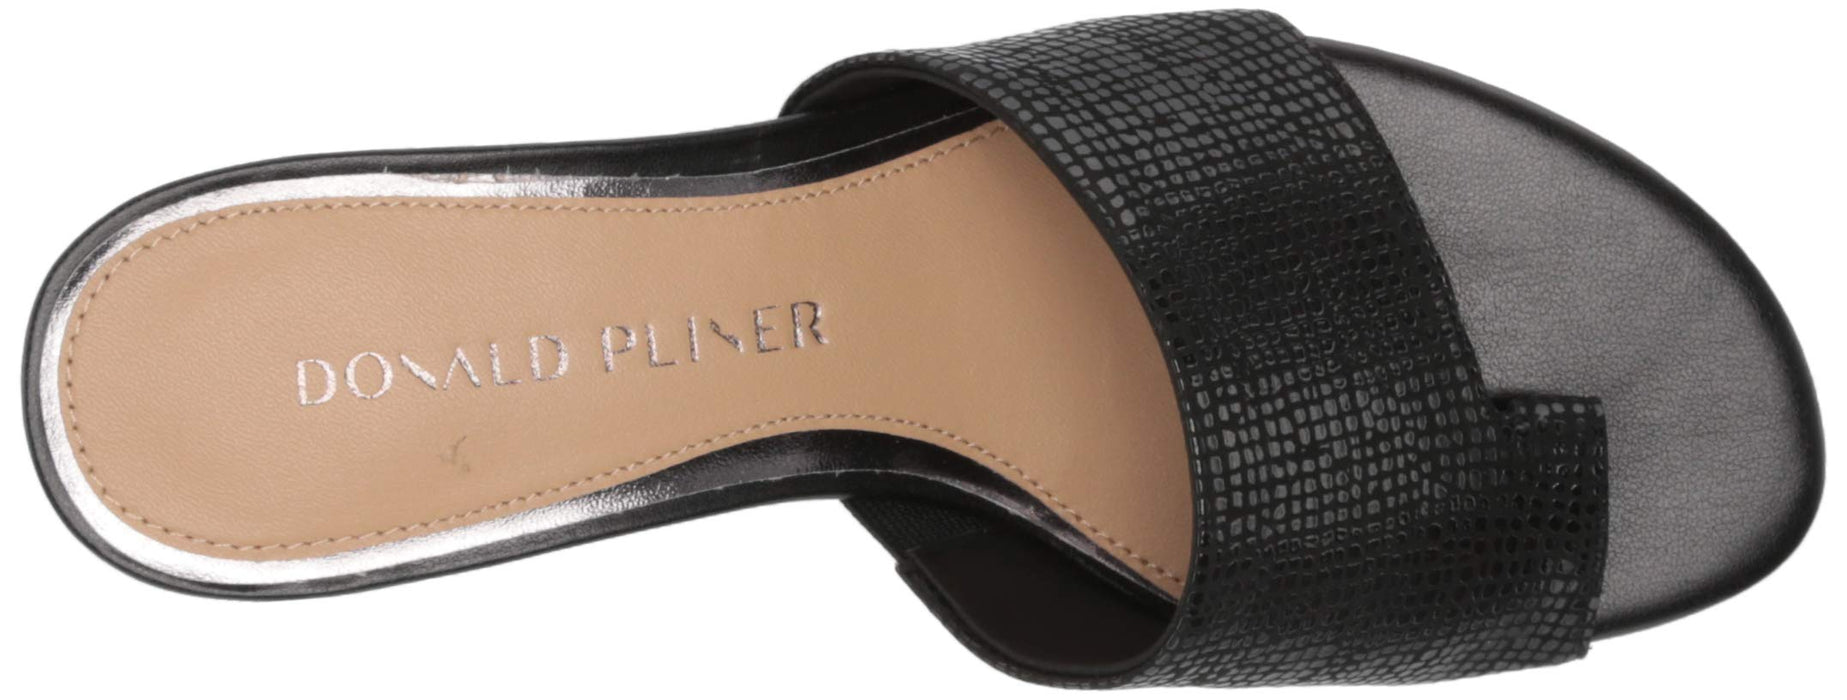 Donald Pliner Women's Melros Heeled Sandal